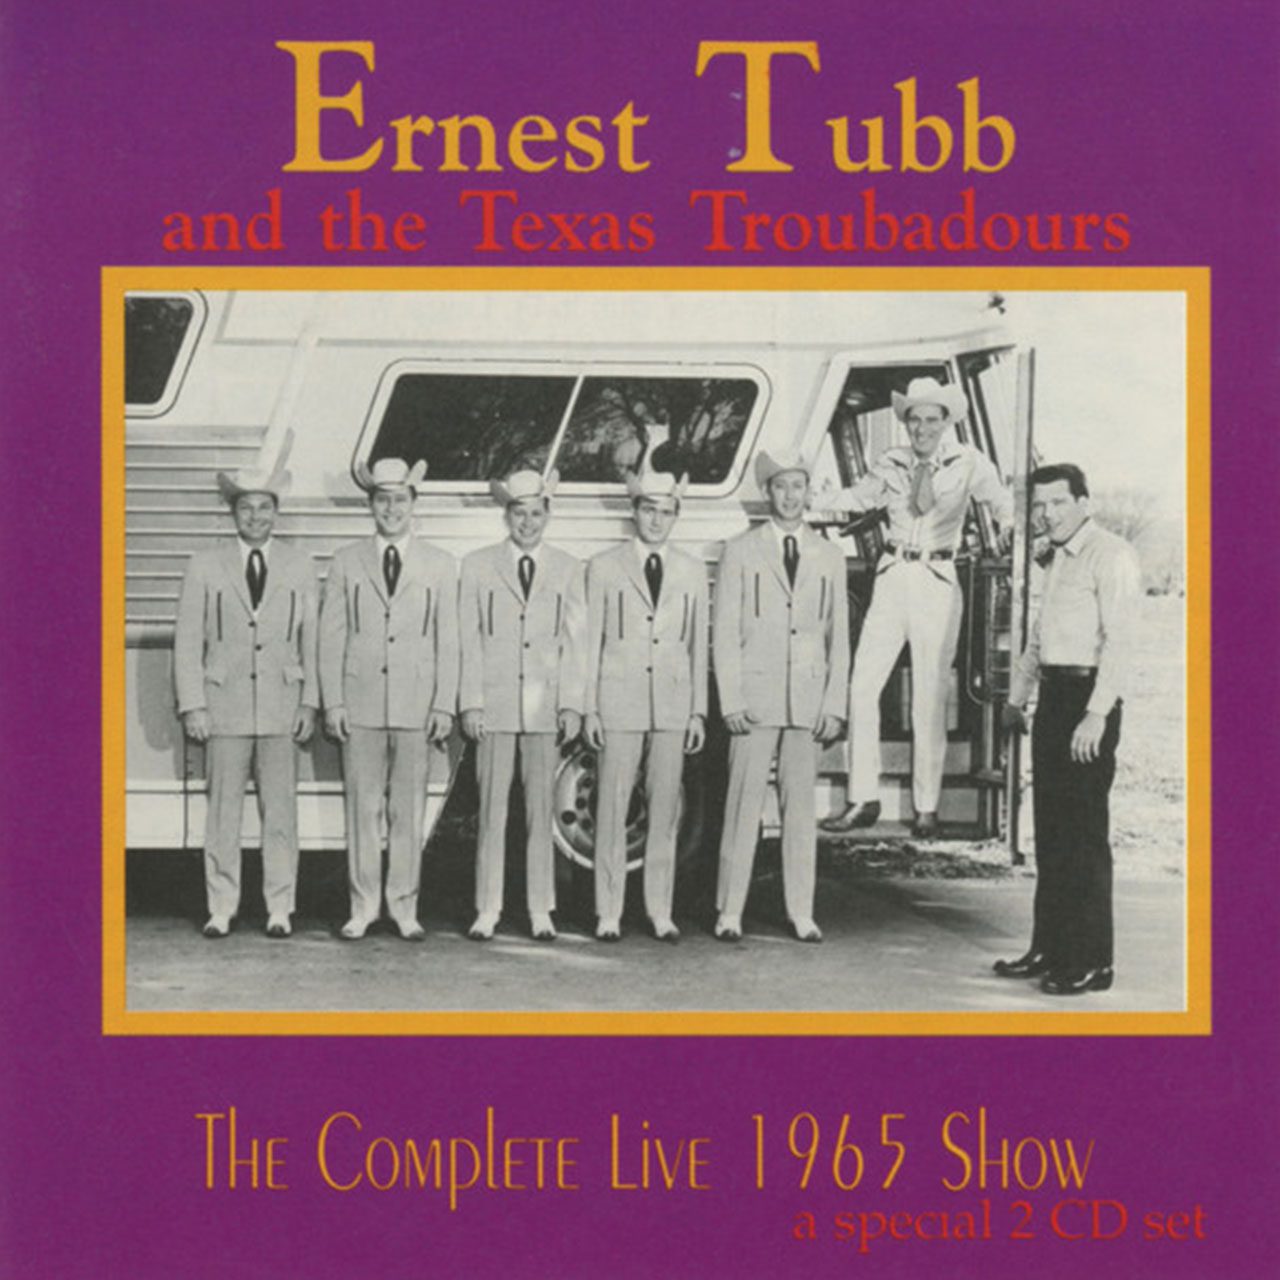 Ernest Tubb - The Complete Live 1965 Show cover album